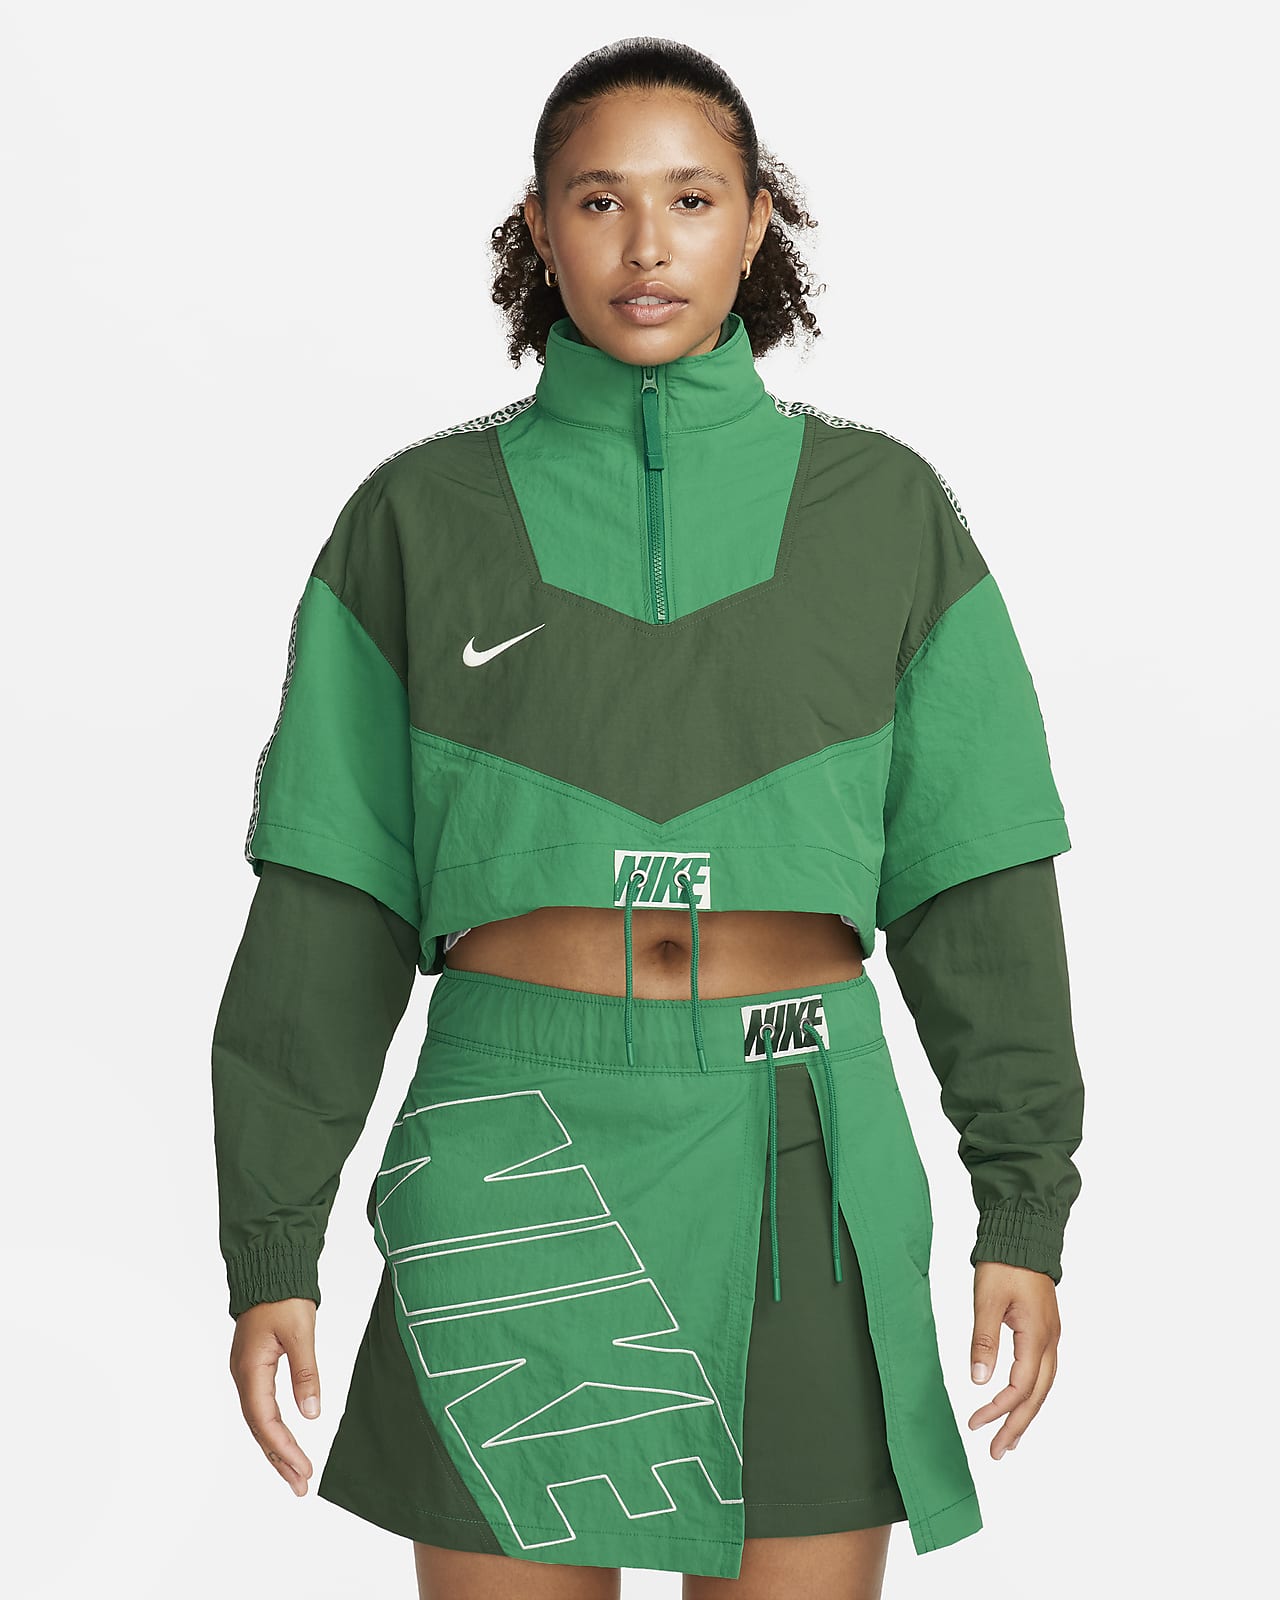 Afhankelijkheid Kameraad kapitalisme Nike Sportswear Trainingsanzug-Jacke für Damen. Nike LU